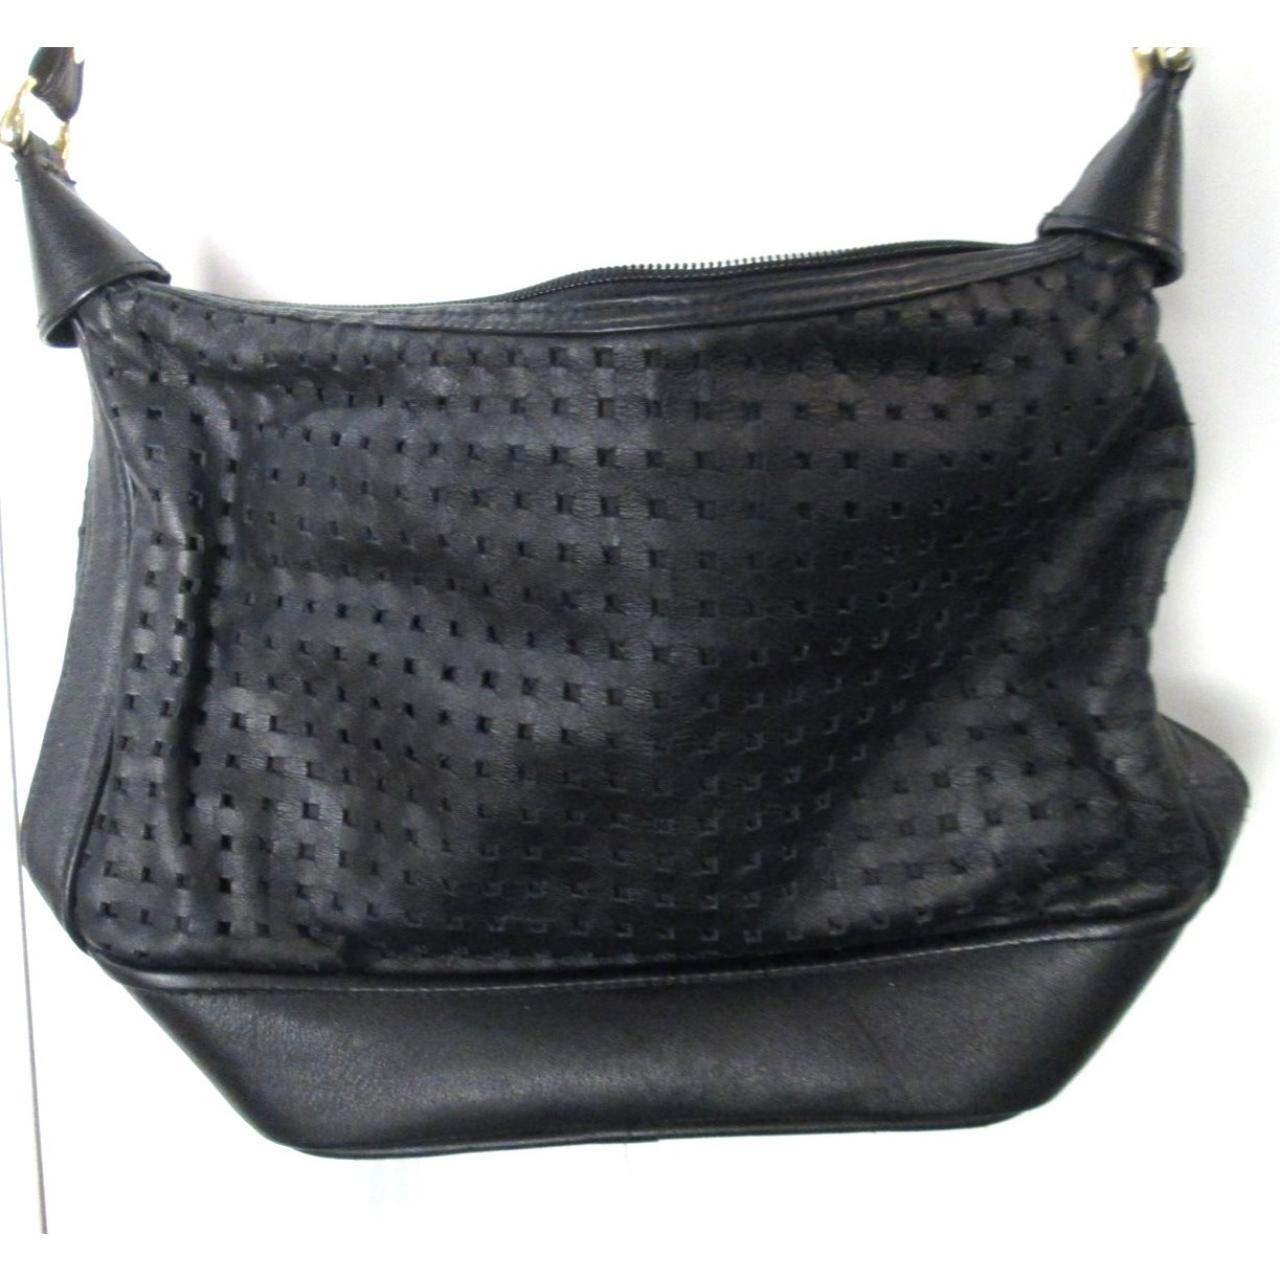 Product Image 2 - Braciano Handbag Black Basket Weave